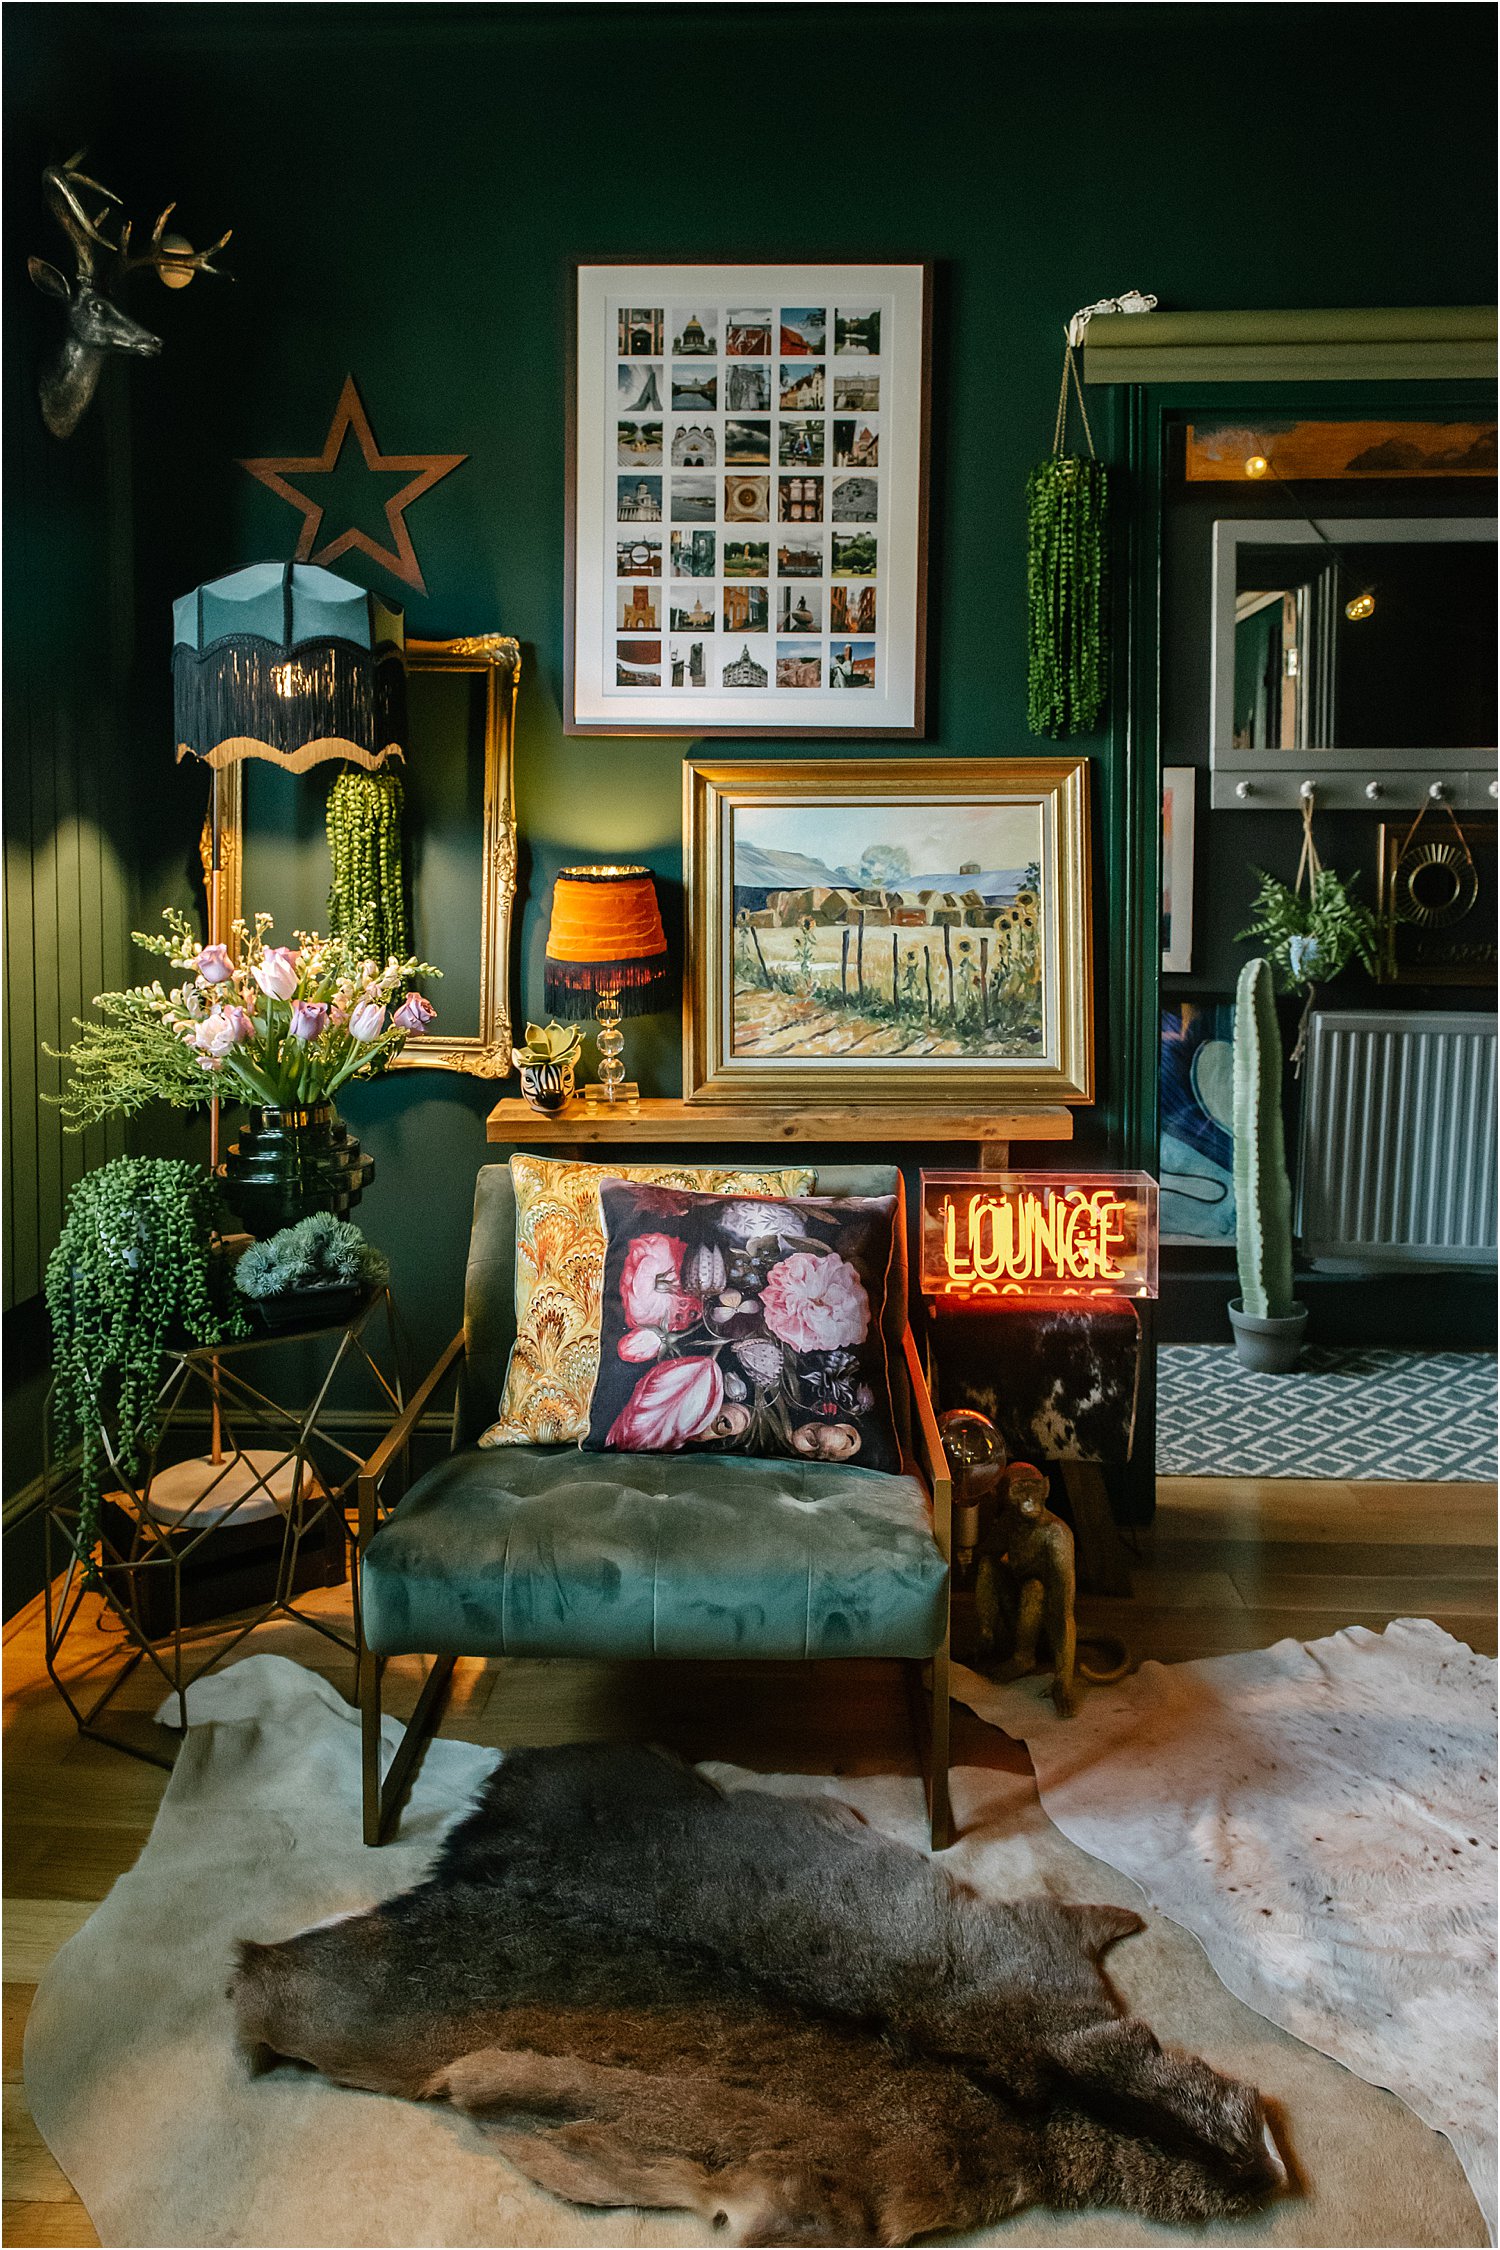 dark-blue-green-maximalist-interior-design-wallpaper-moody-layered-home